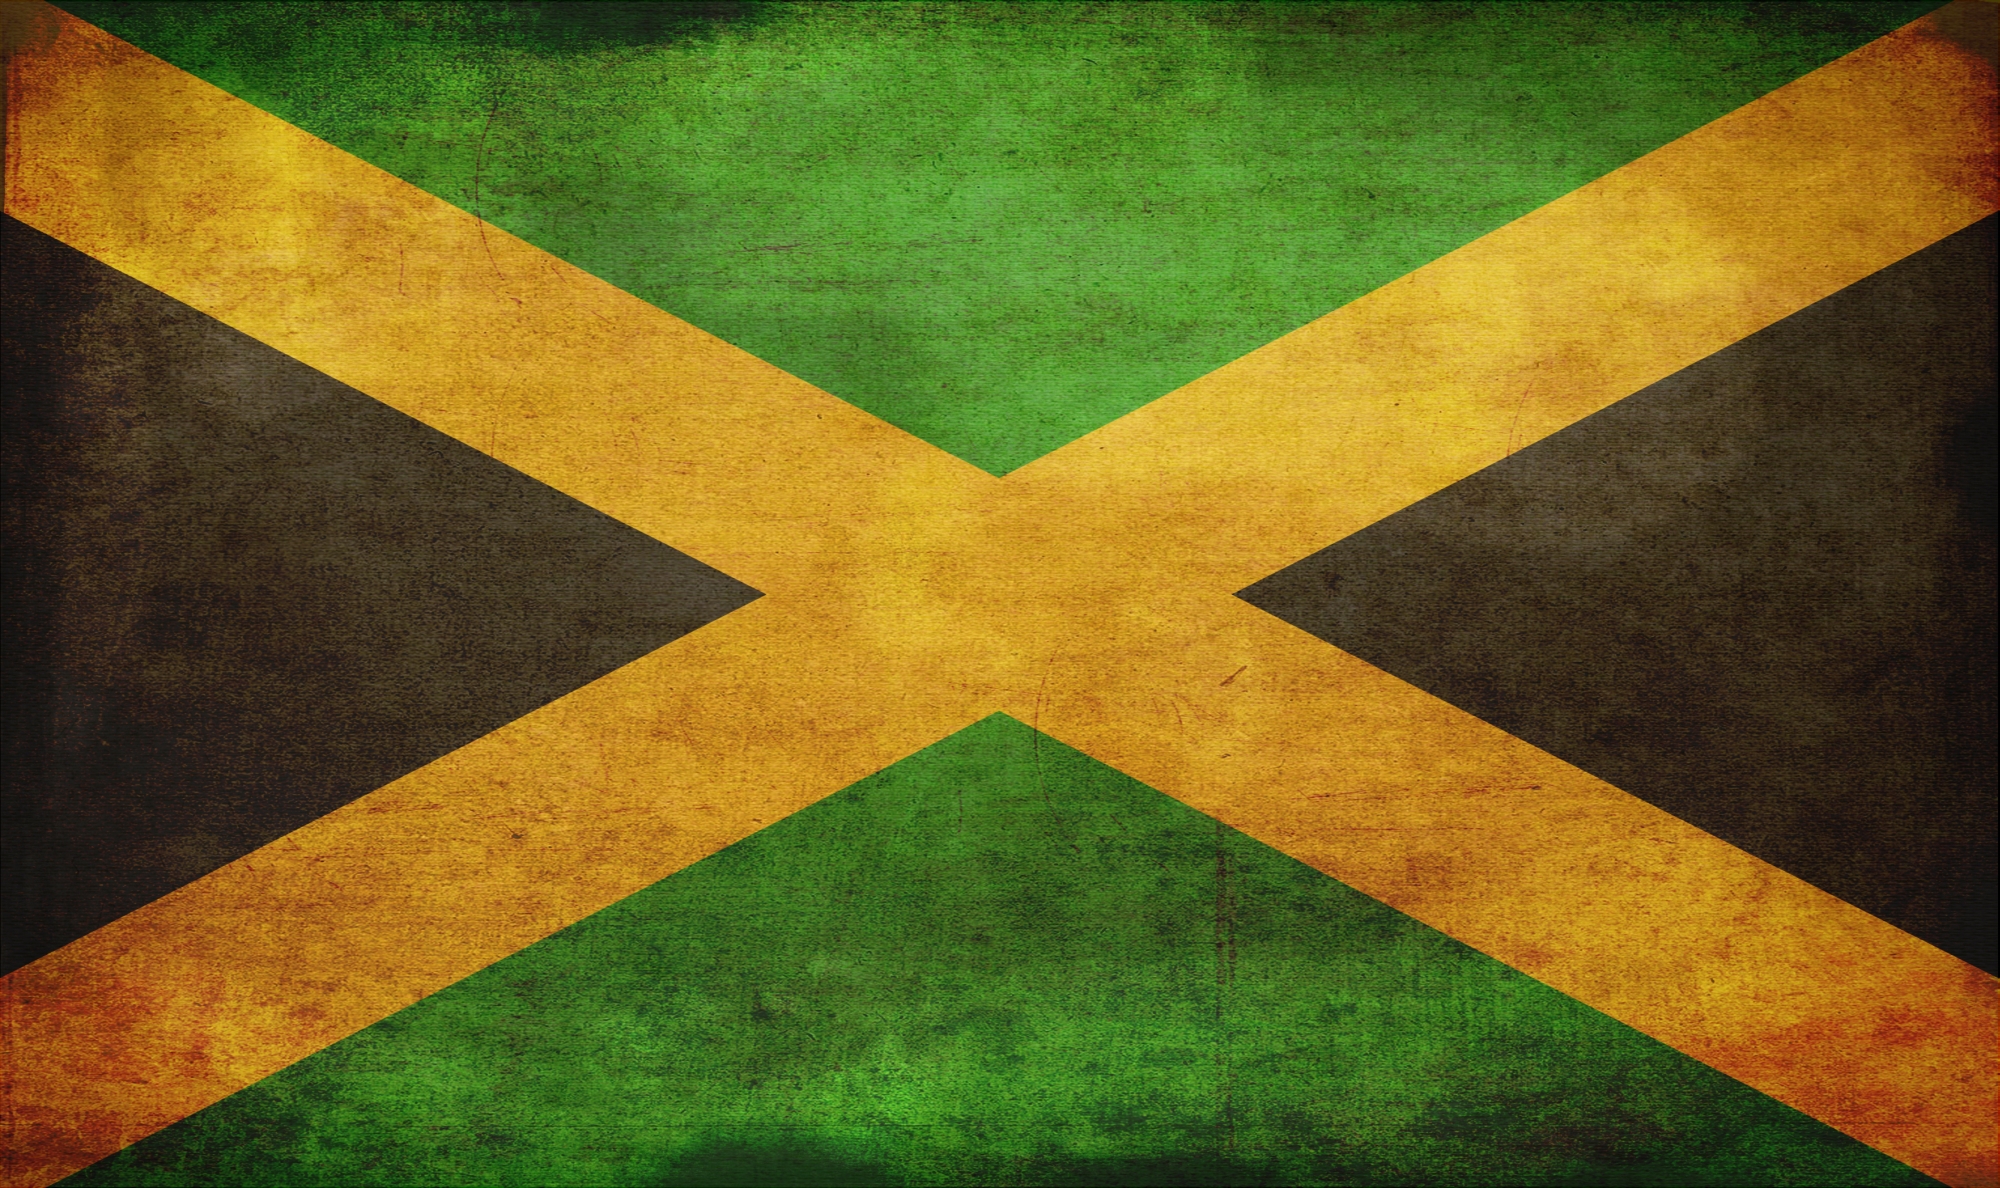 флаги, Ямайка - обои на рабочий стол